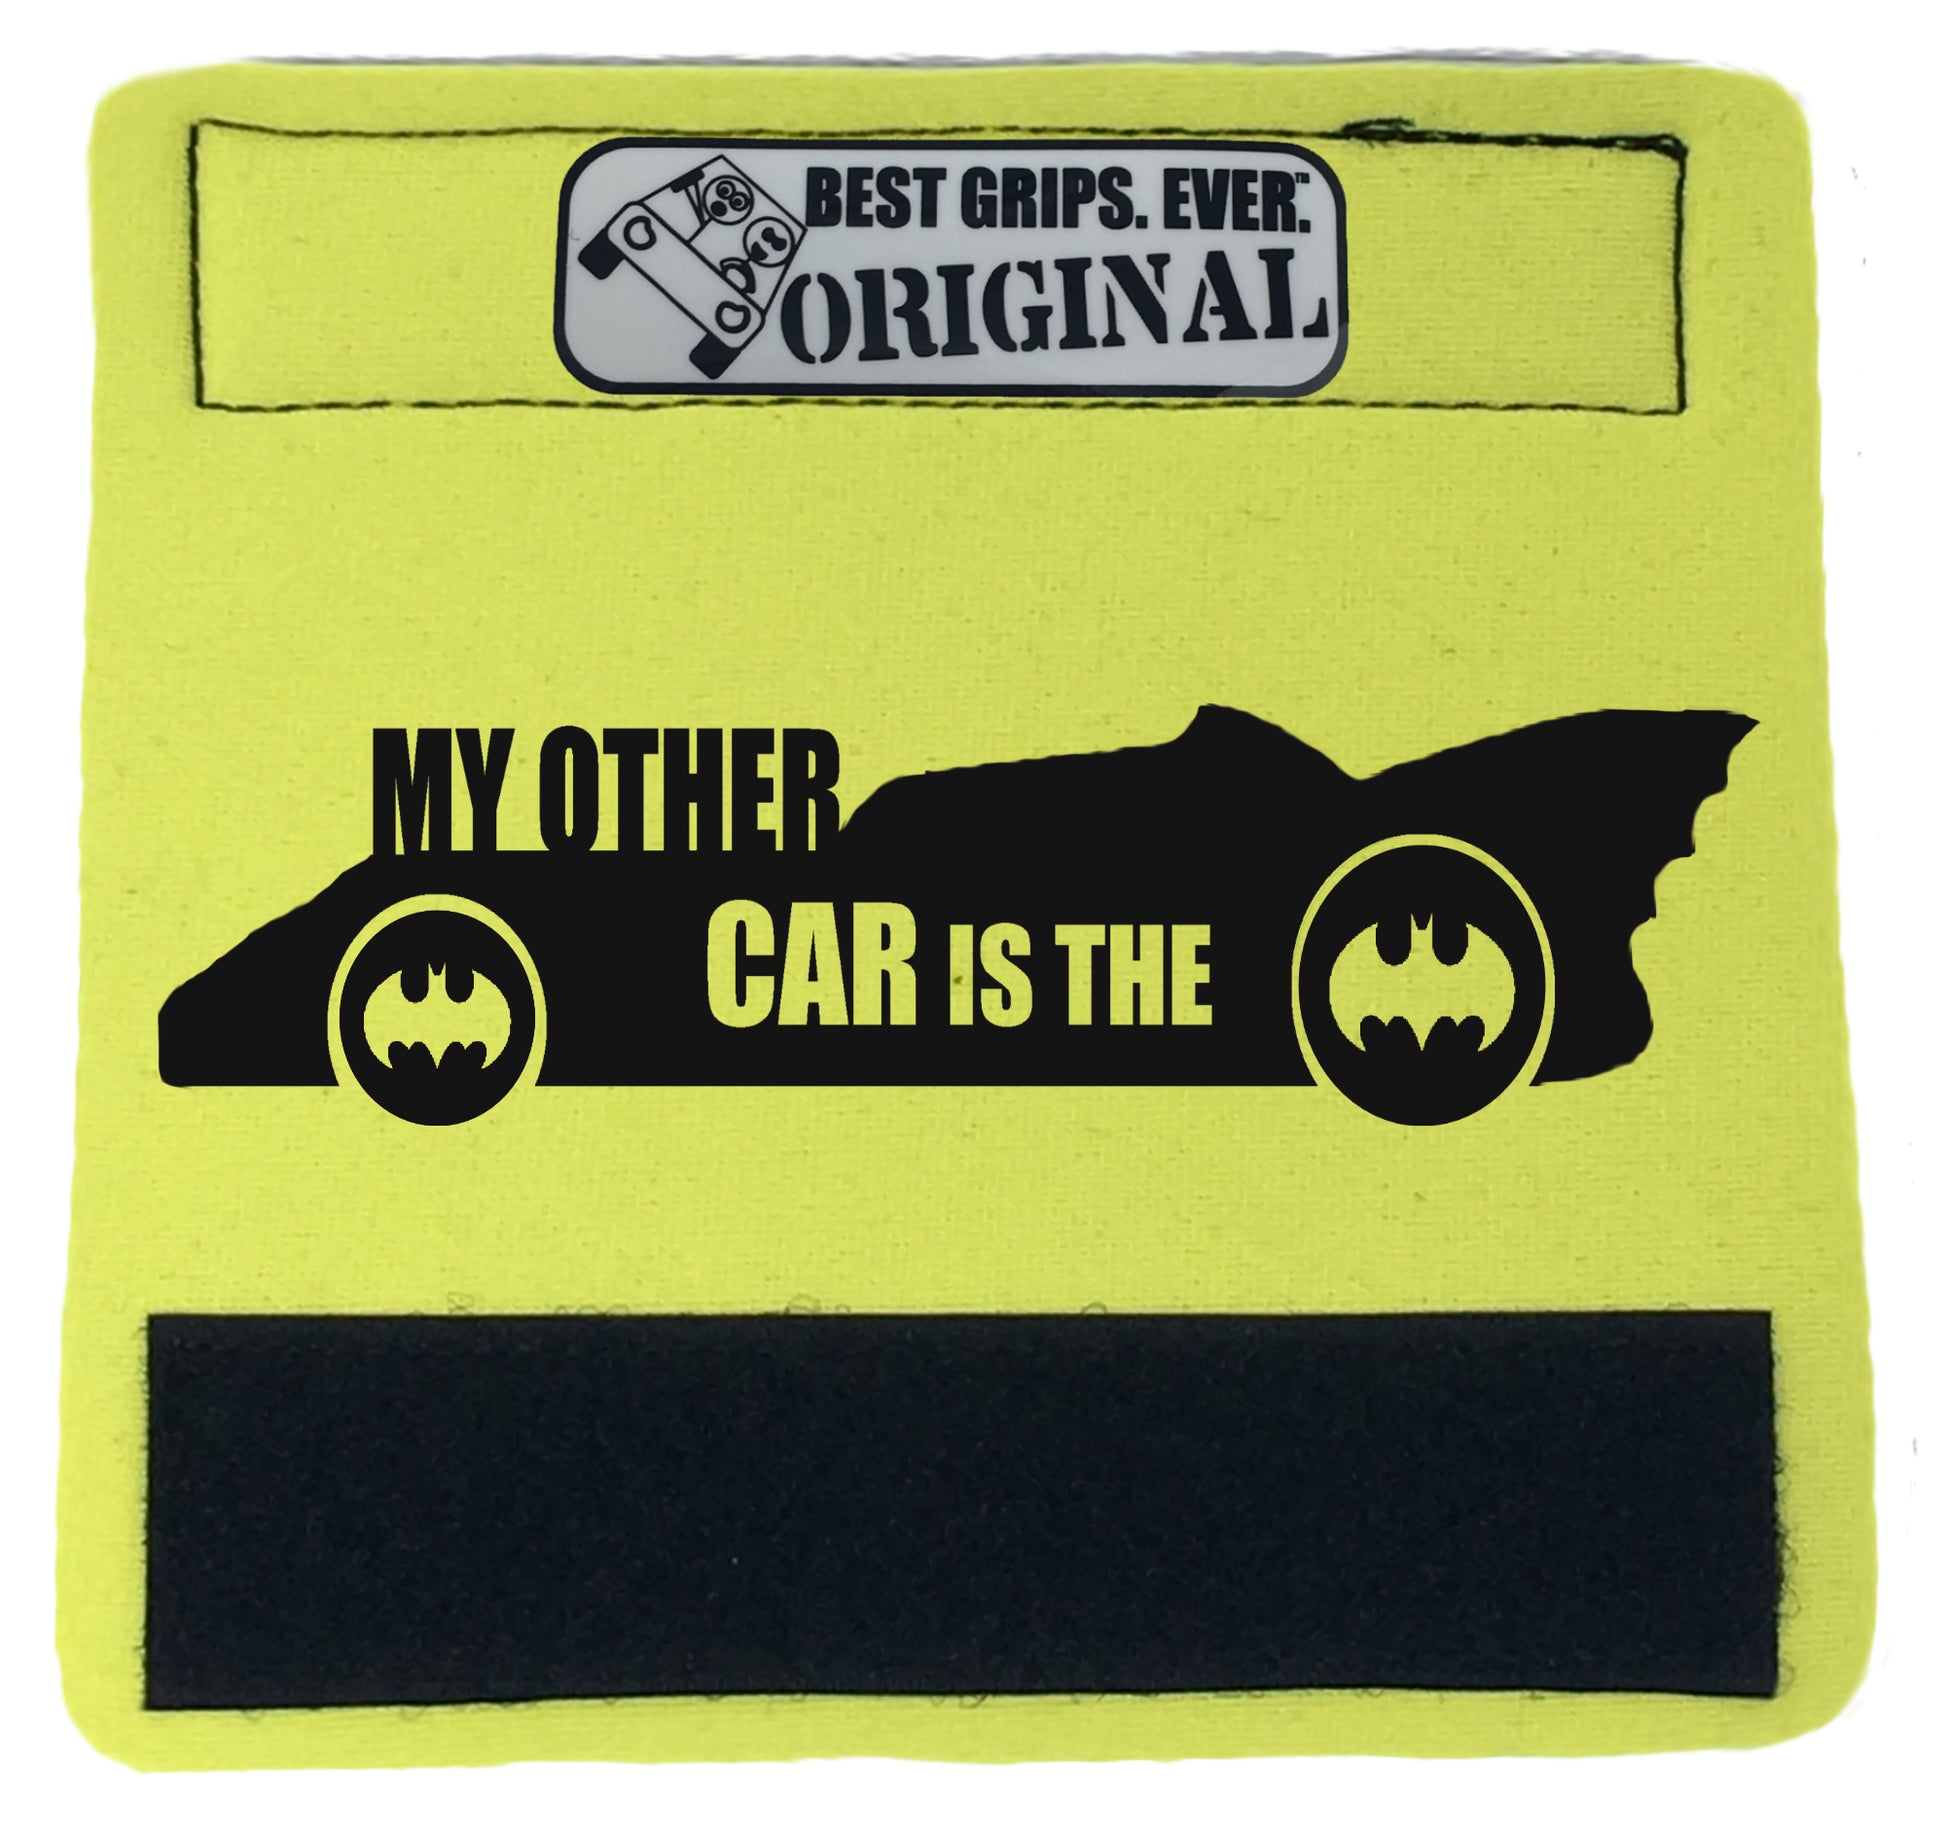 The Batmobile Grip. - BEST GRIPS. EVER.®